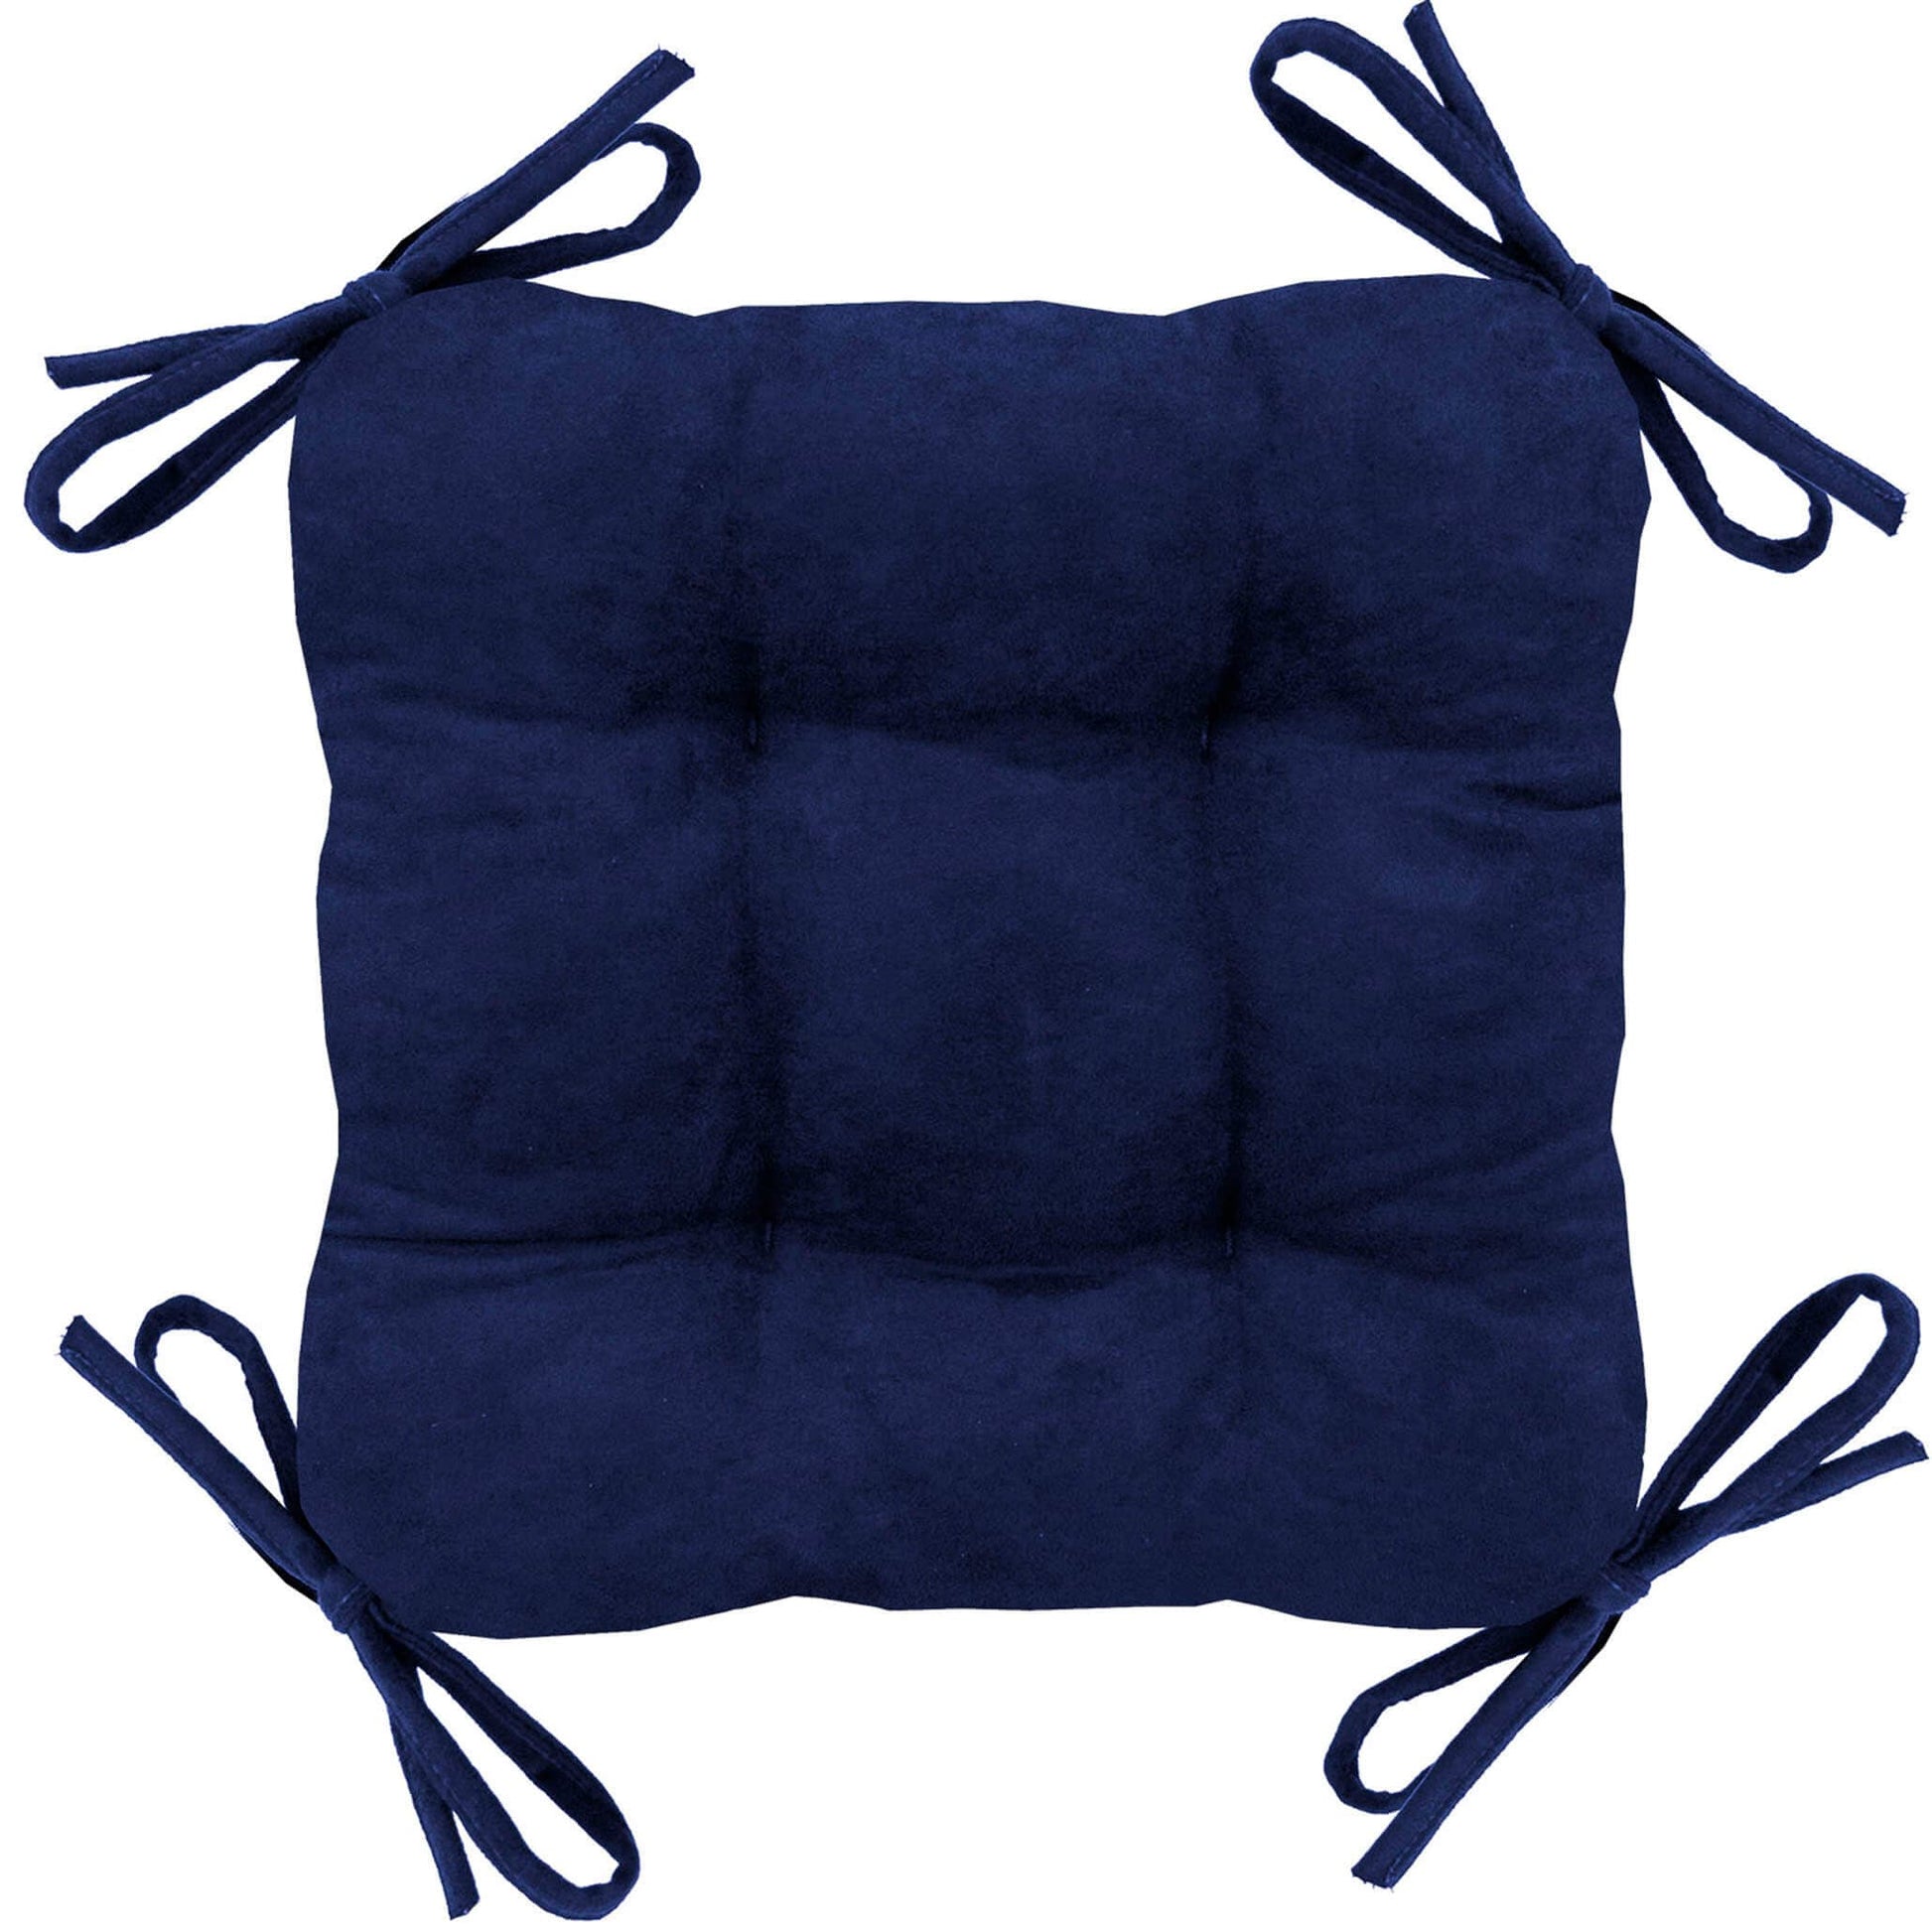 Micro-suede Royal Blue Square Industrial Bar Stool Cushion - Latex Foam Fill - Barnett Home Decor 